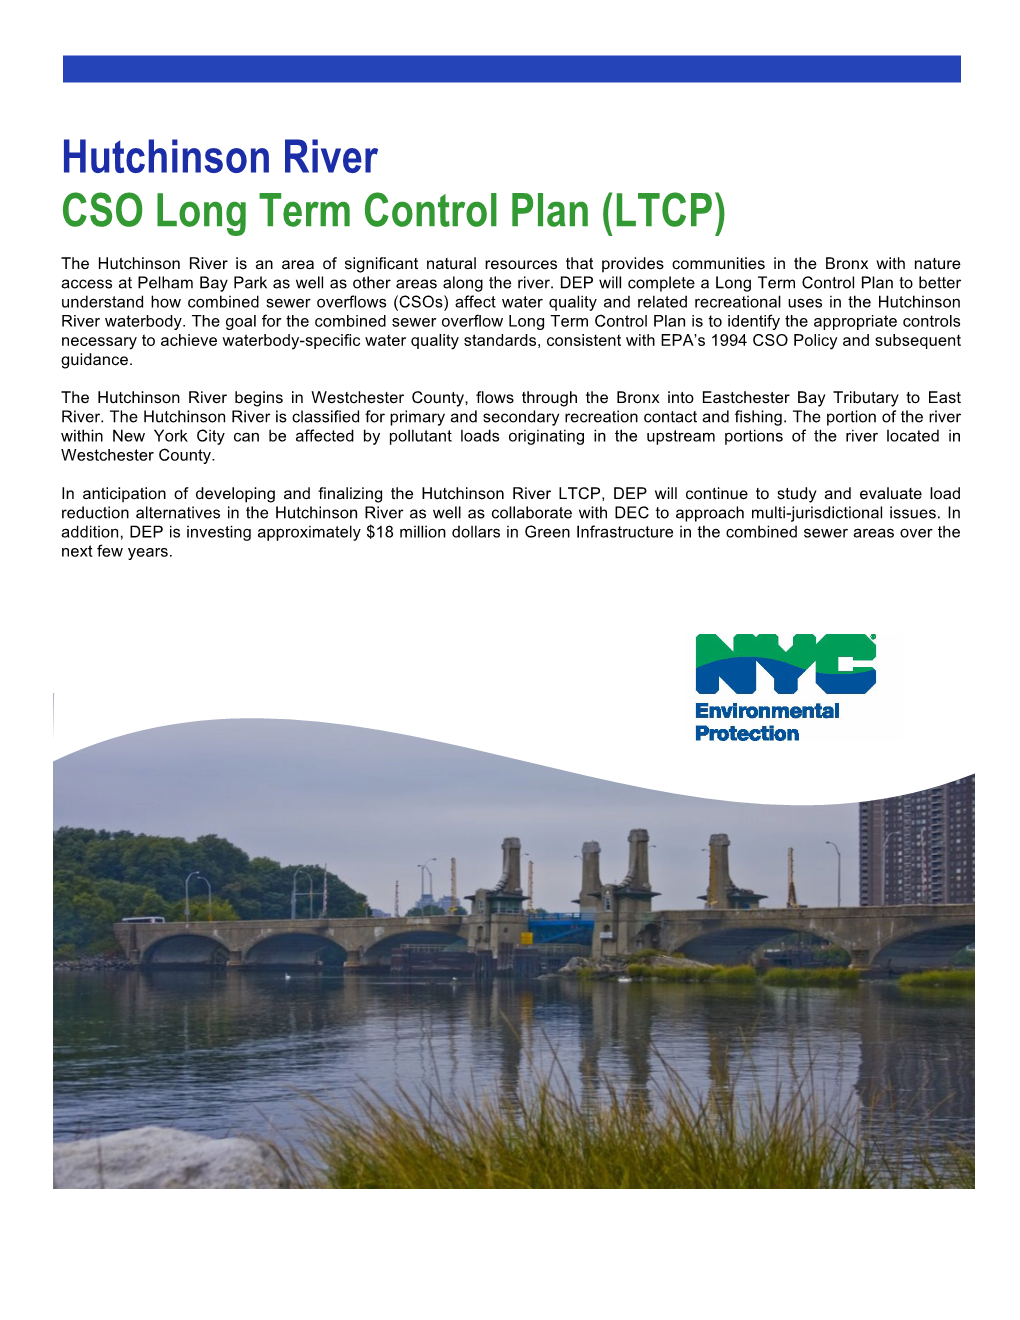 Hutchinson River CSO Long Term Control Plan (LTCP)